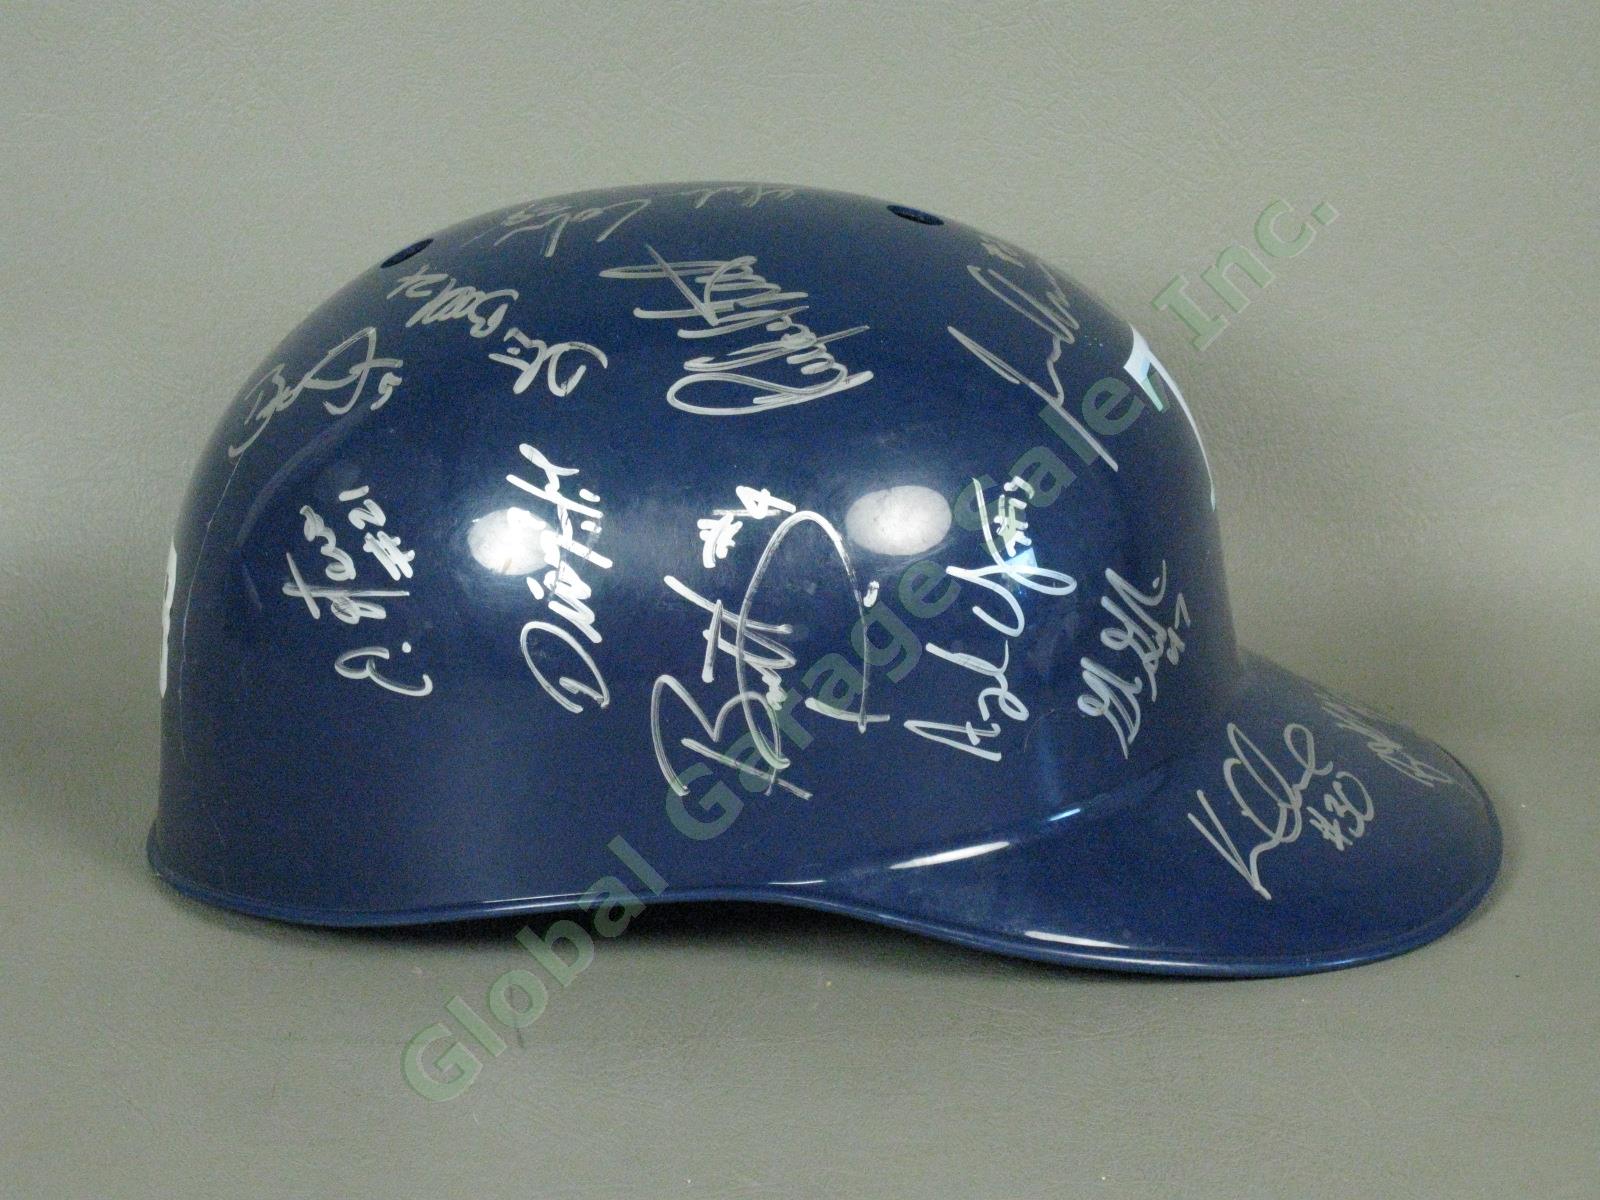 2009 Hudson Valley Renegades Team Signed Baseball Helmet NYPL Tampa Bay Rays NR 1